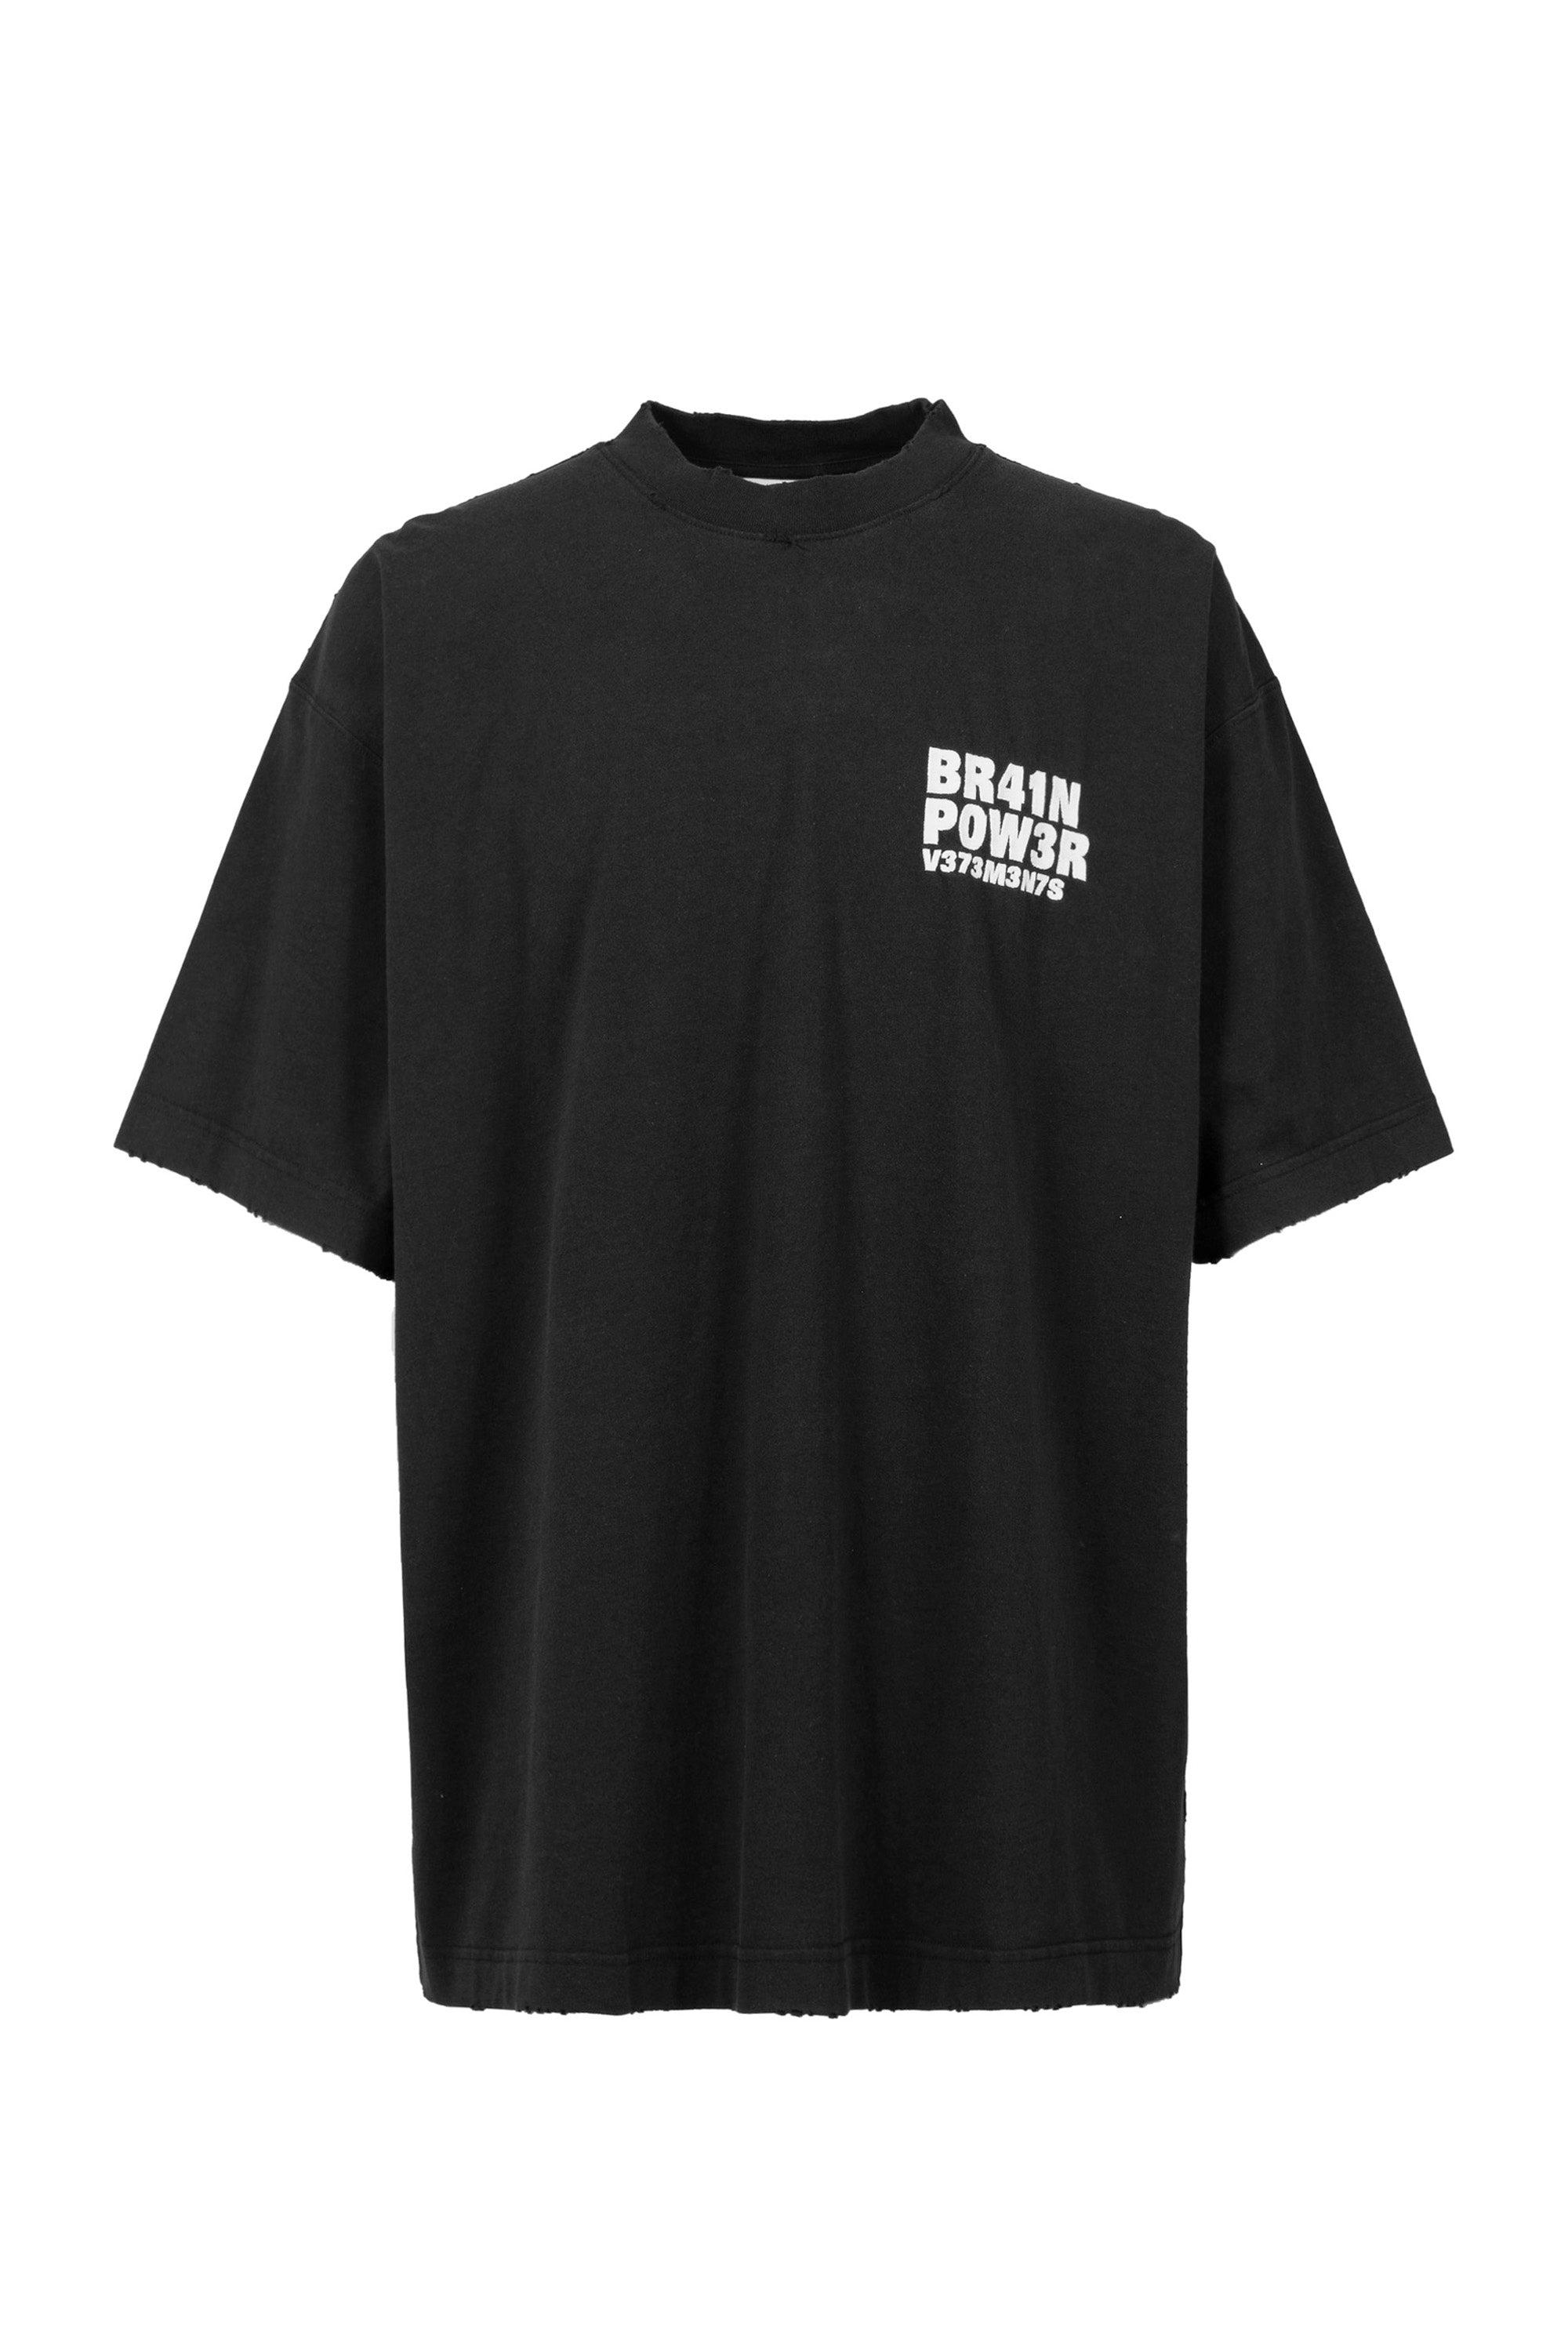 Vetements Brain Power T-shirt in Black for Men | Lyst